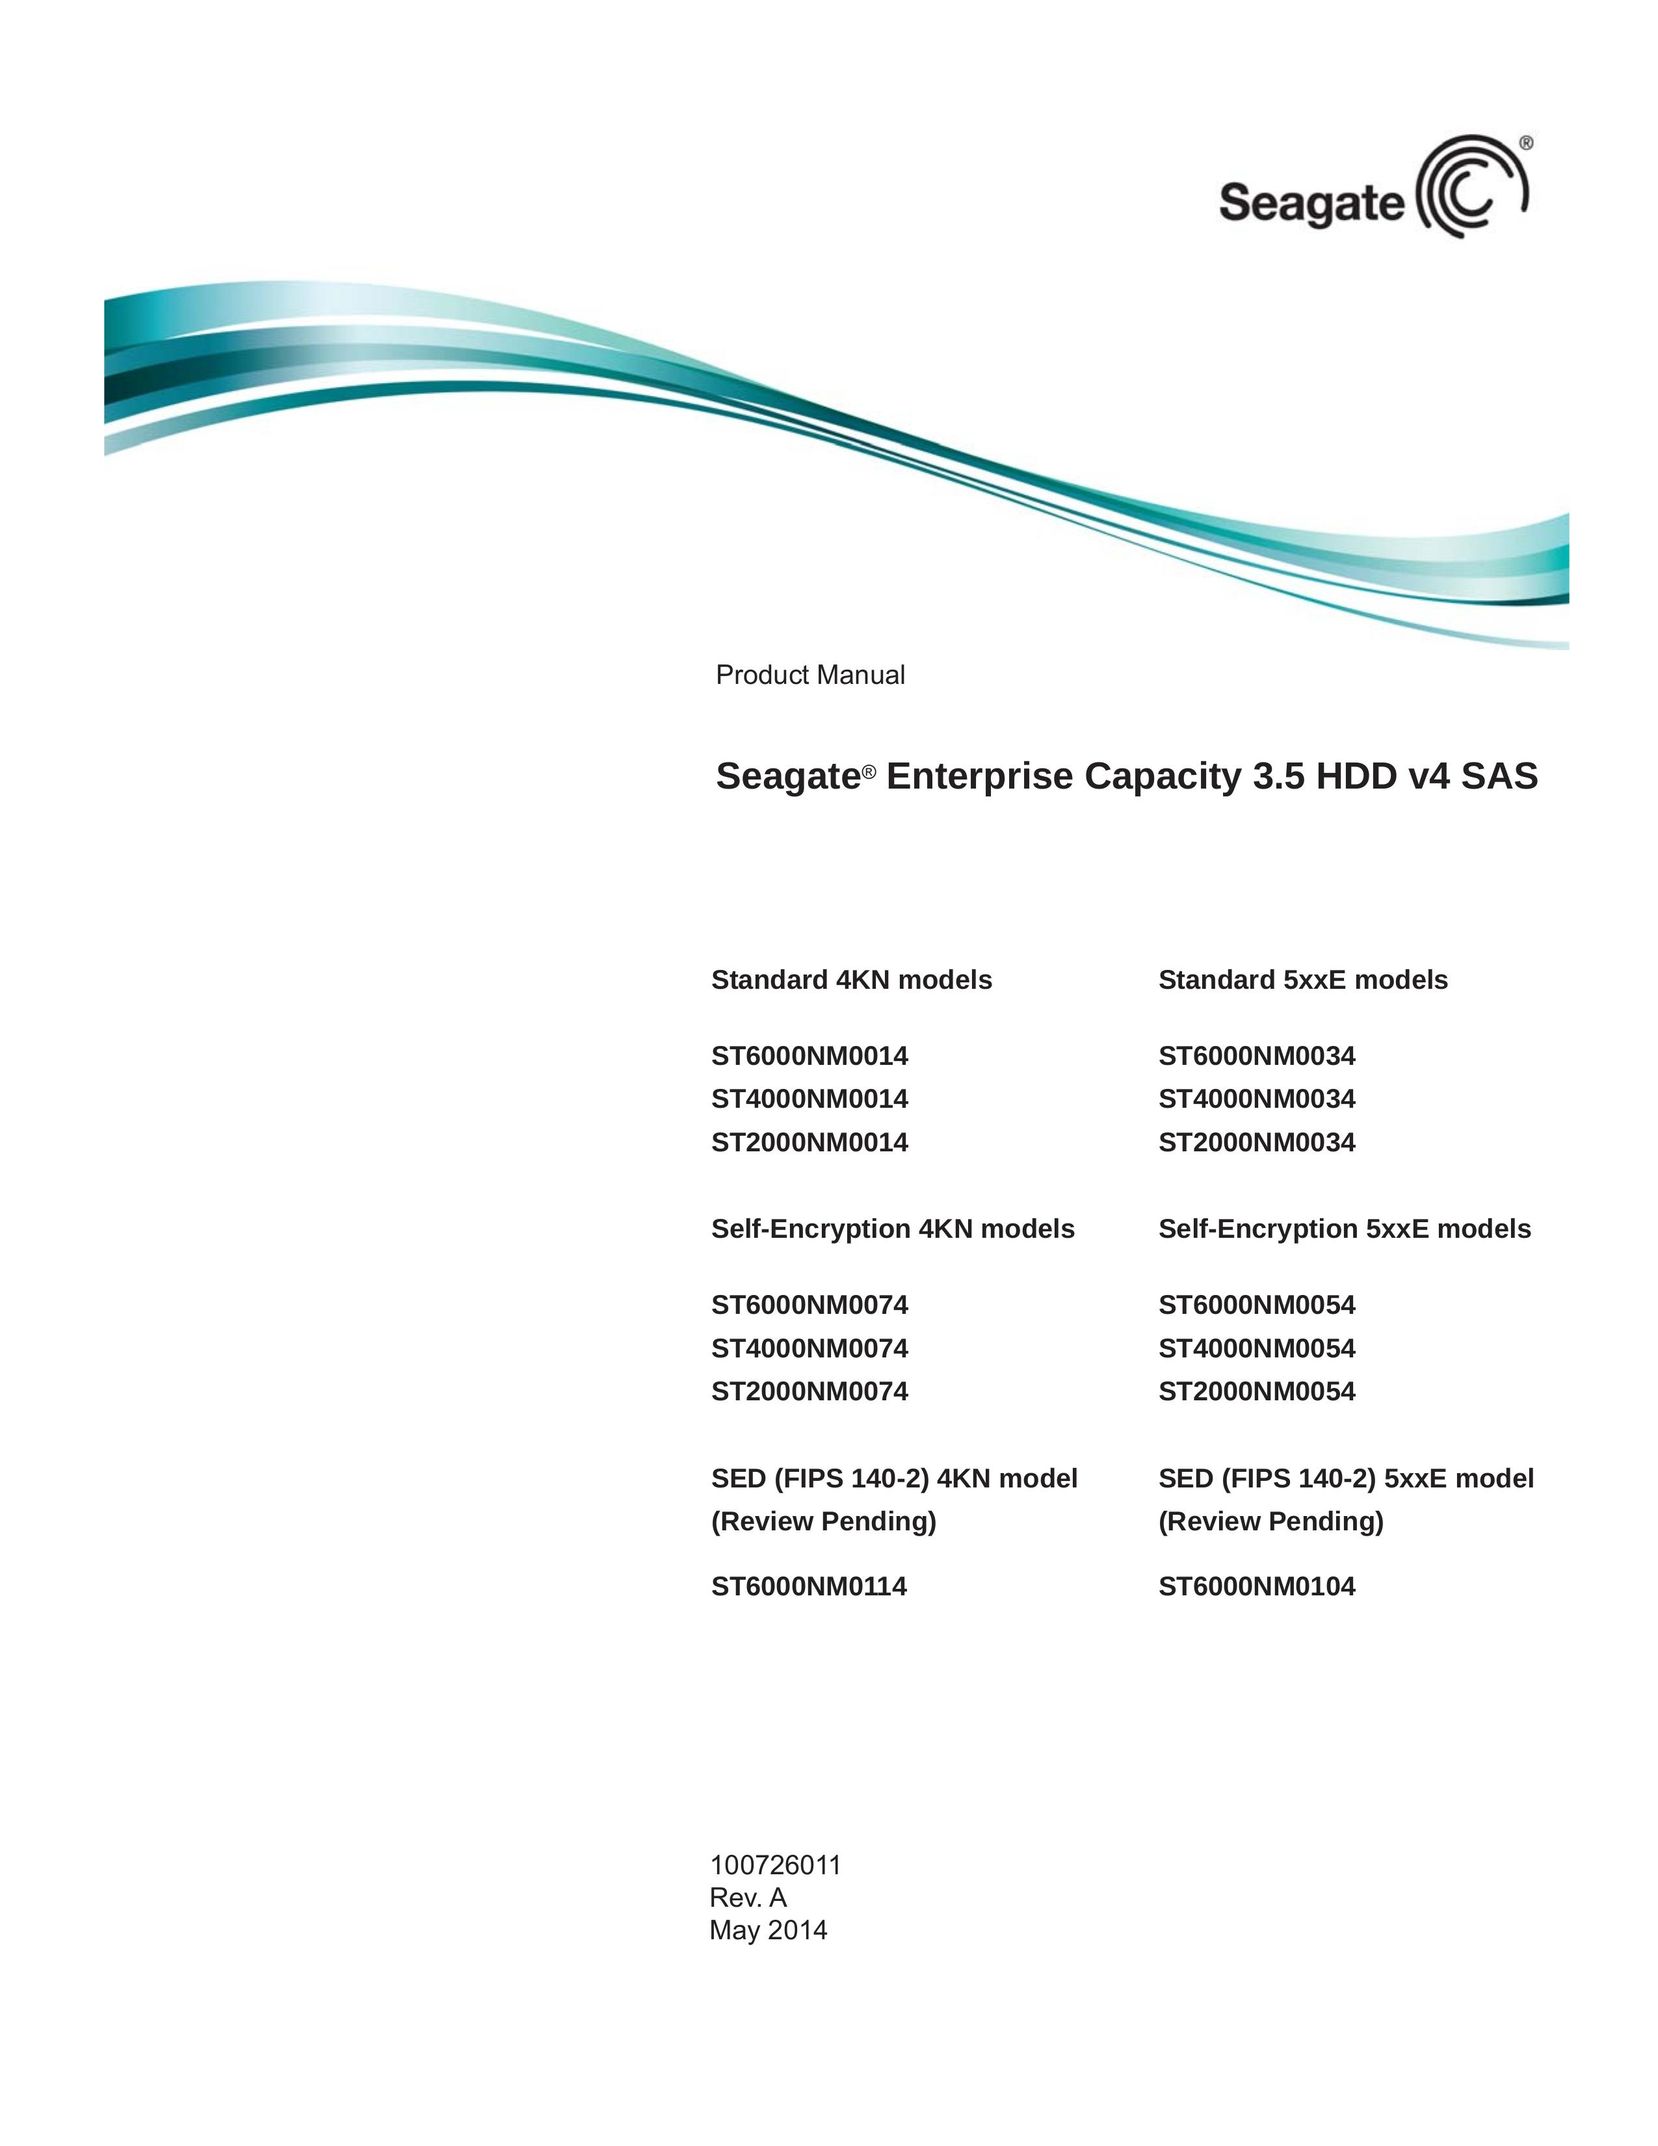 Seagate ST2000NM0054 Laptop User Manual